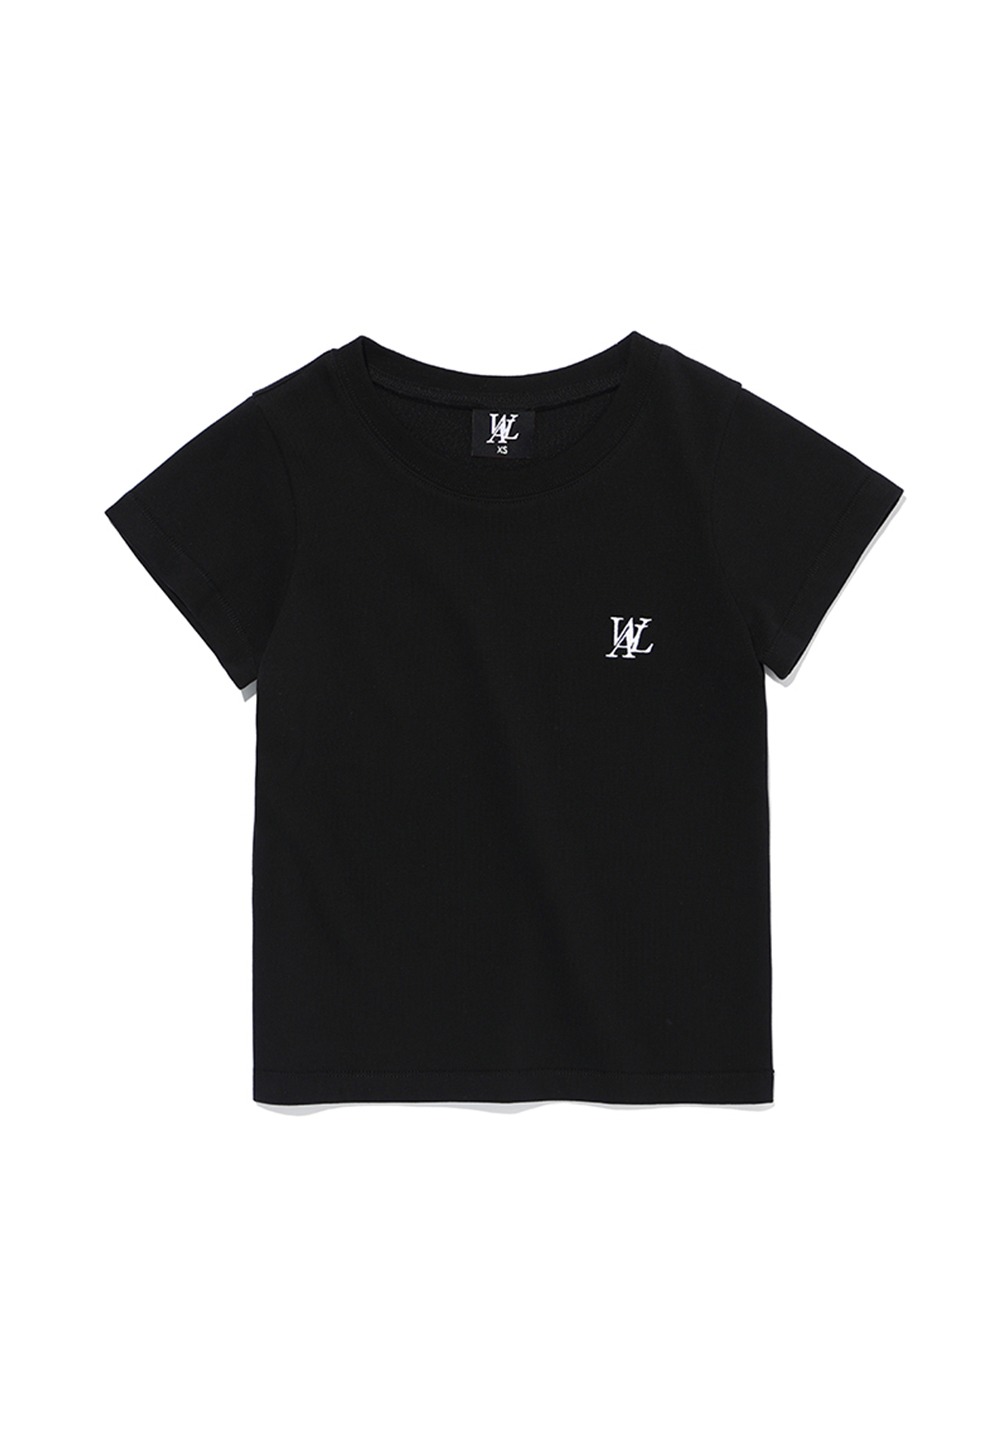 Signature soft slim line T-shirt - BLACK